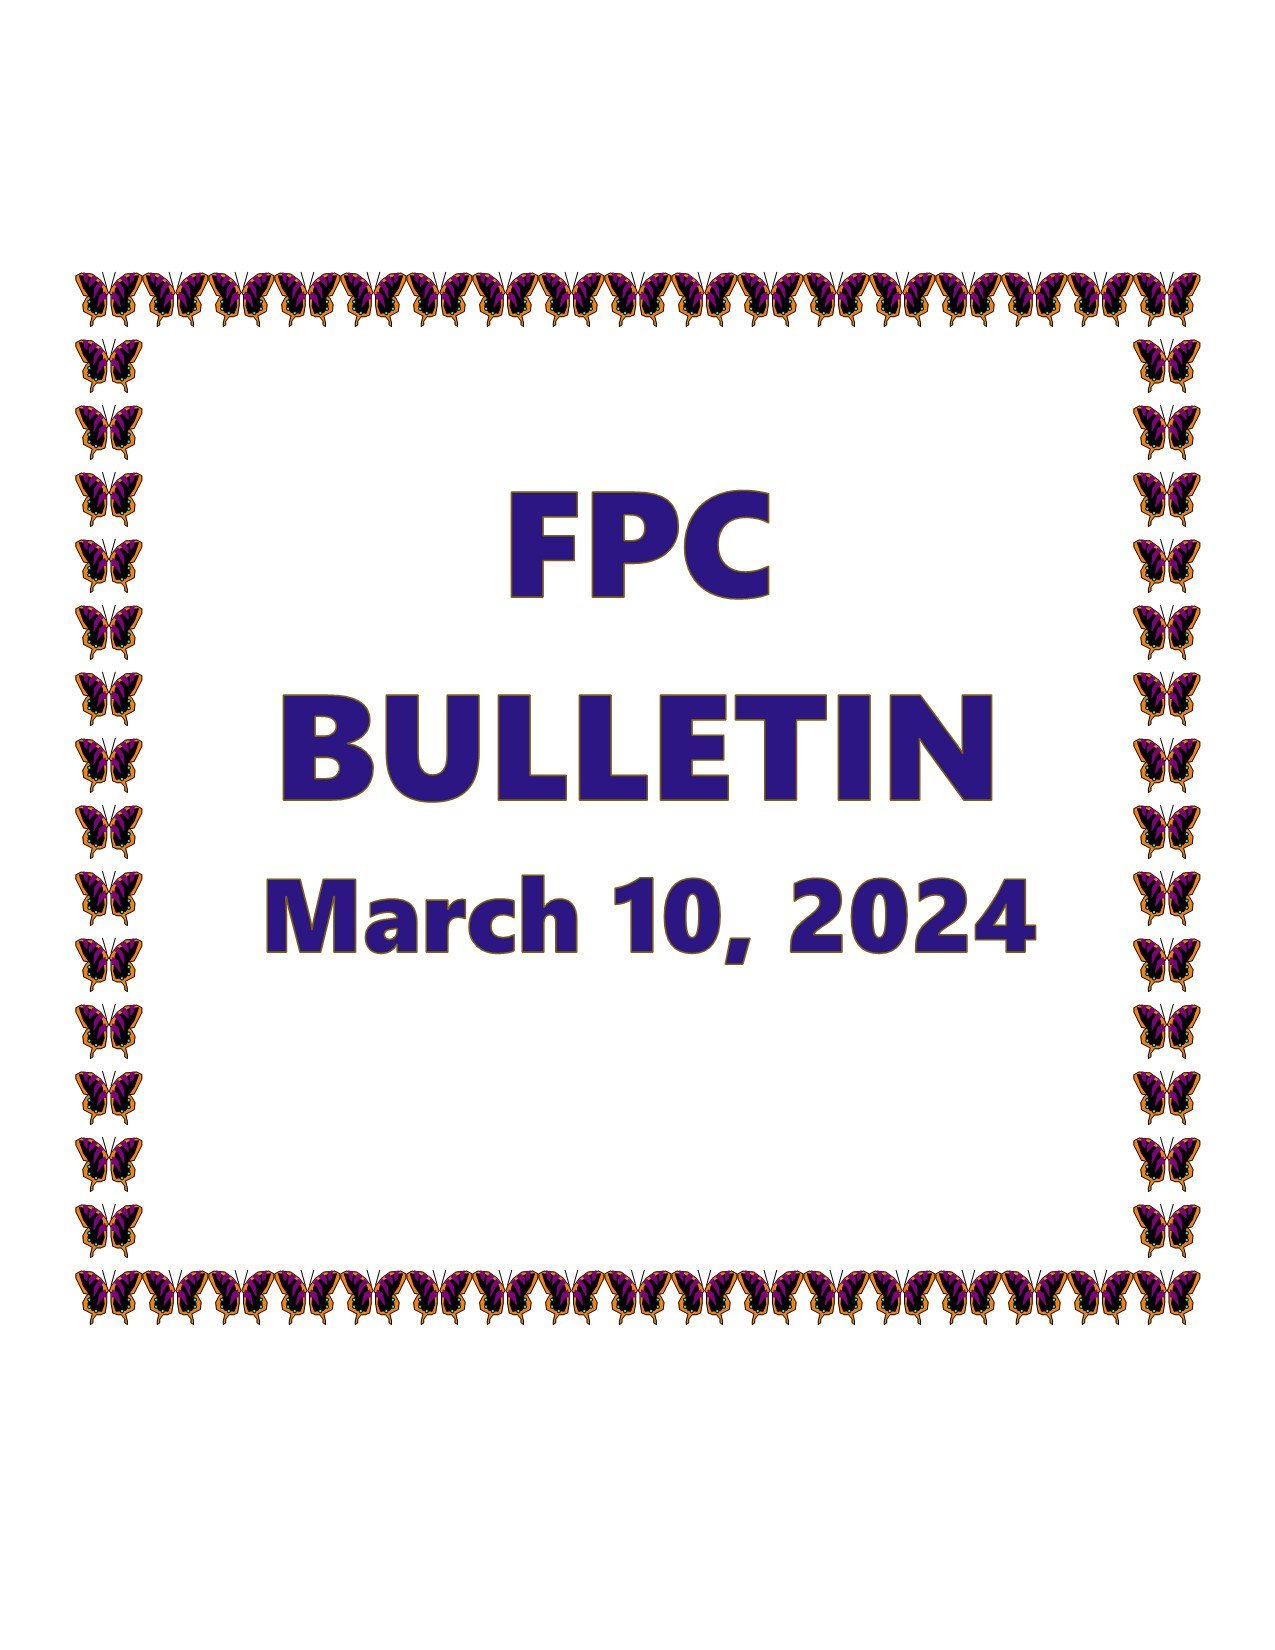 a Button - Bulletin March 10 2024.jpg